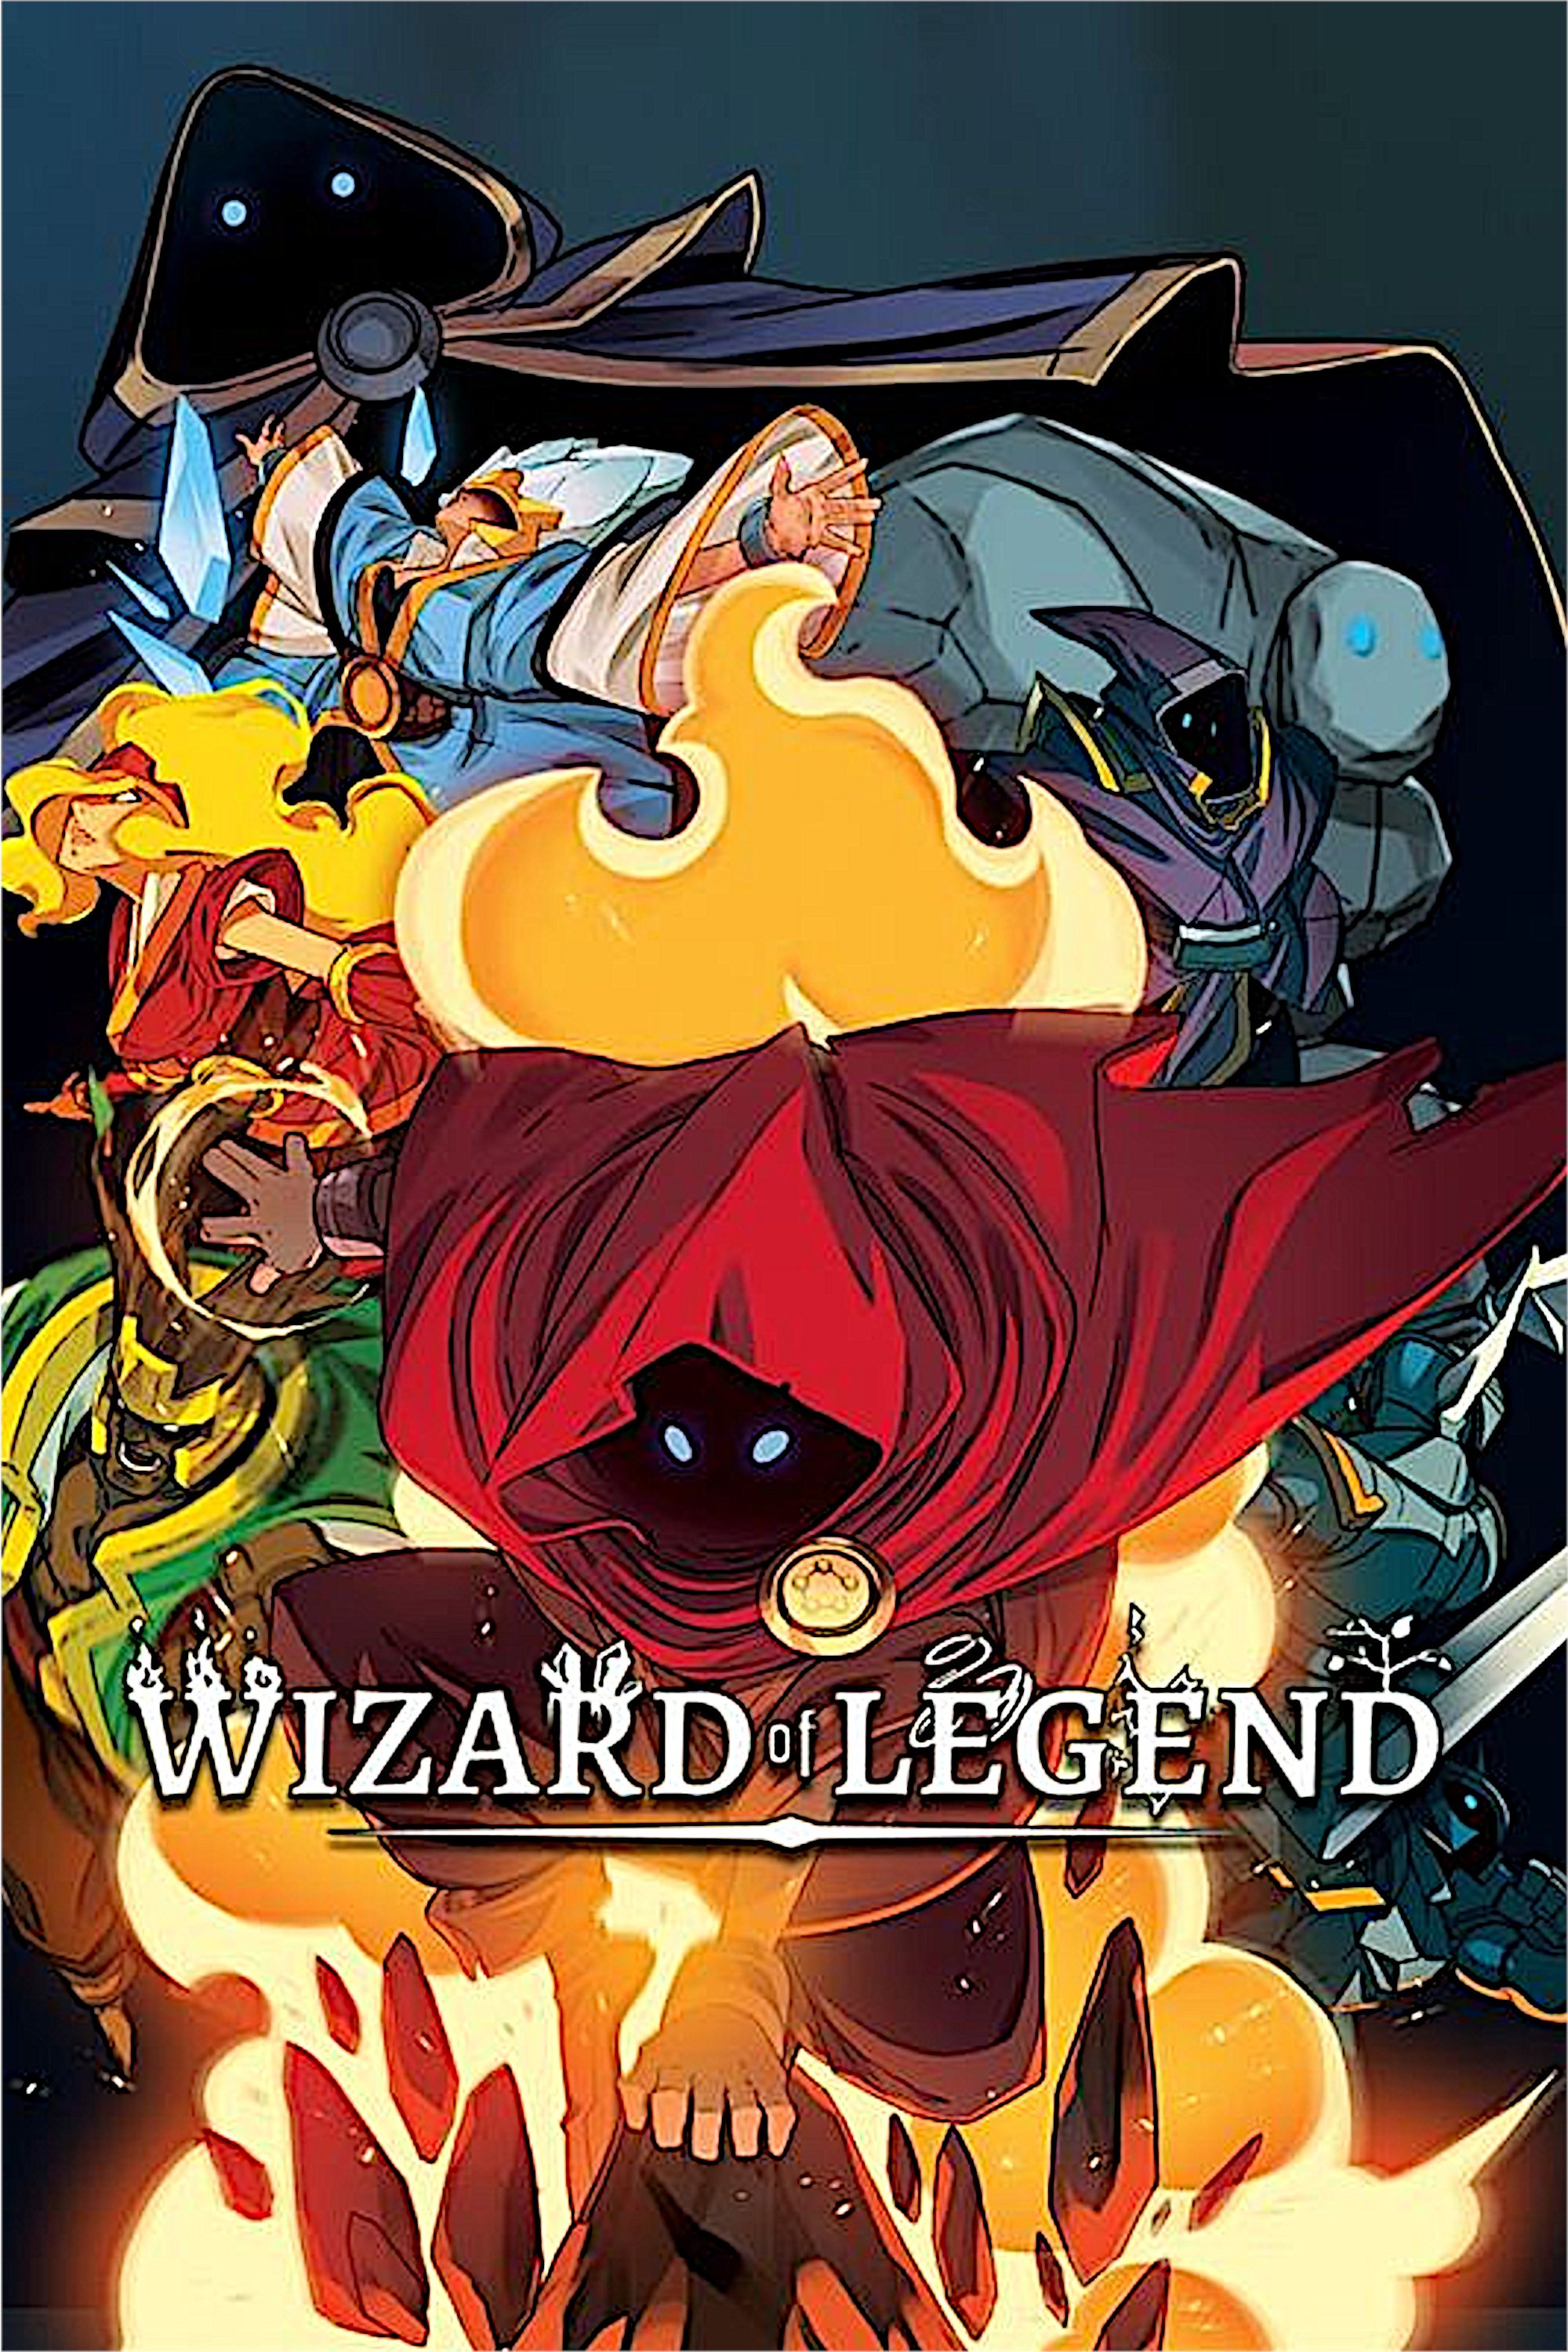 Wizard of Legend cover art